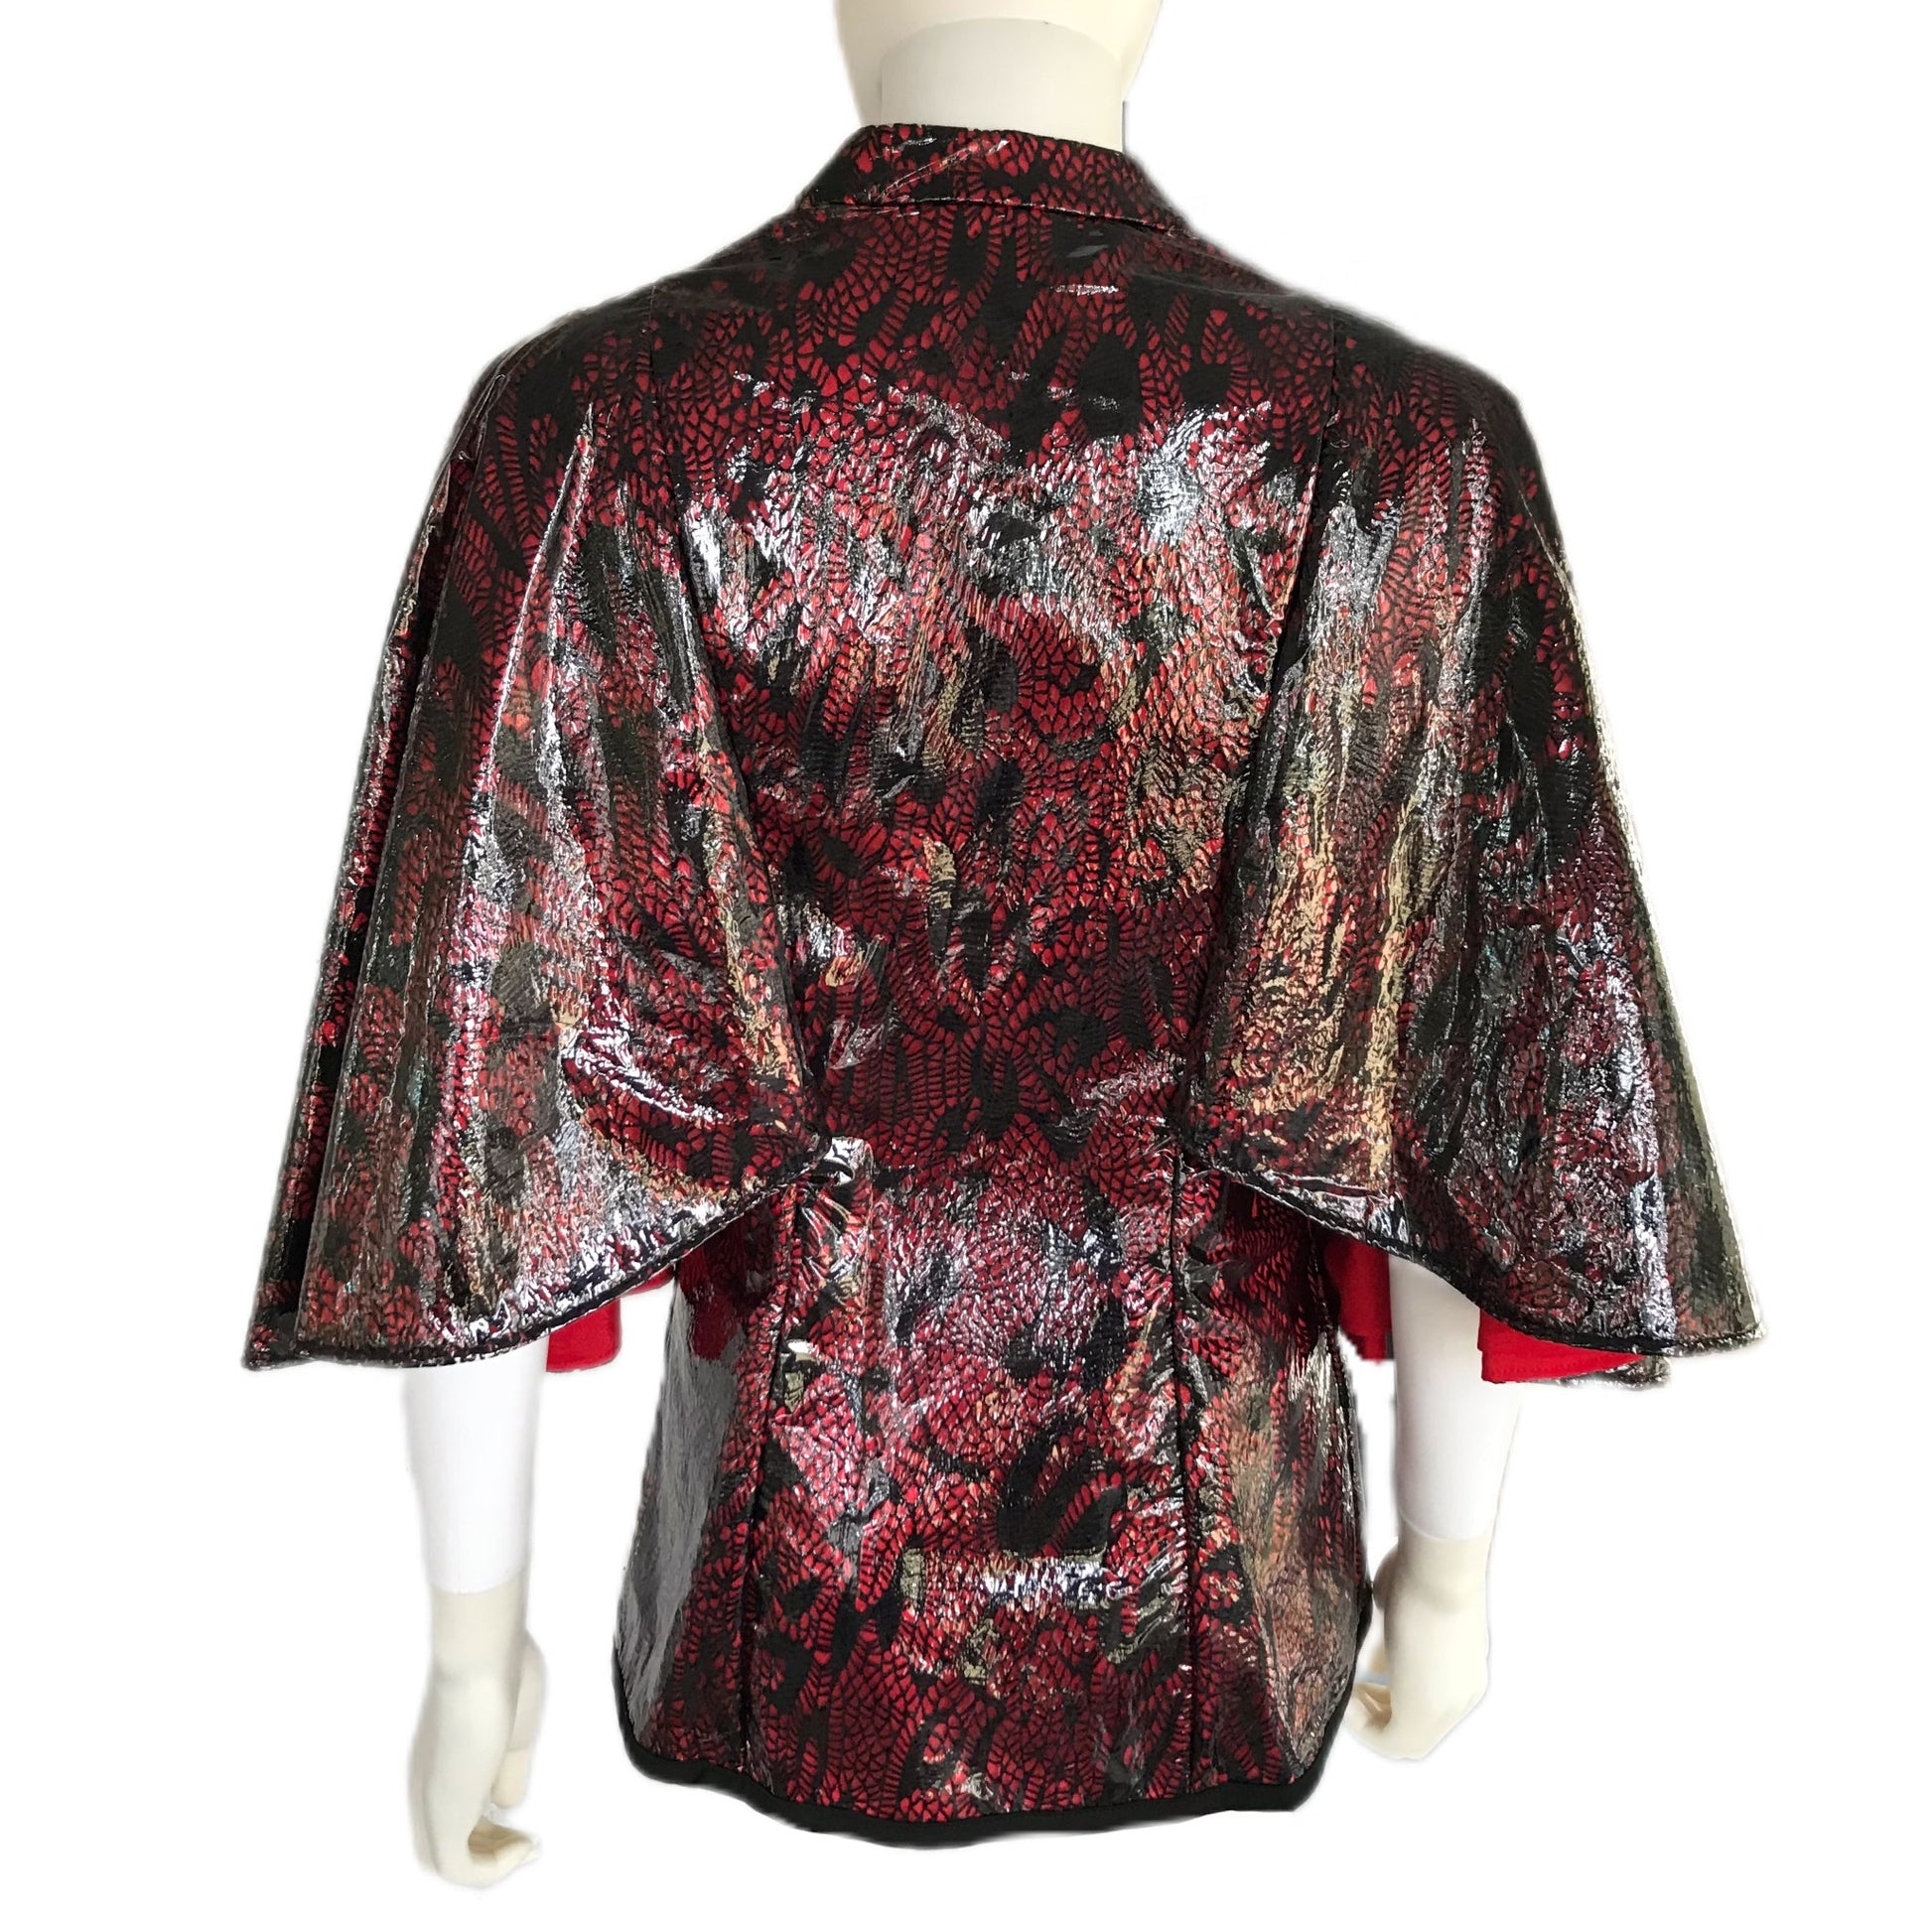 Women's Capelet Style Rain Jacket in Laminated Lace - Size Medium